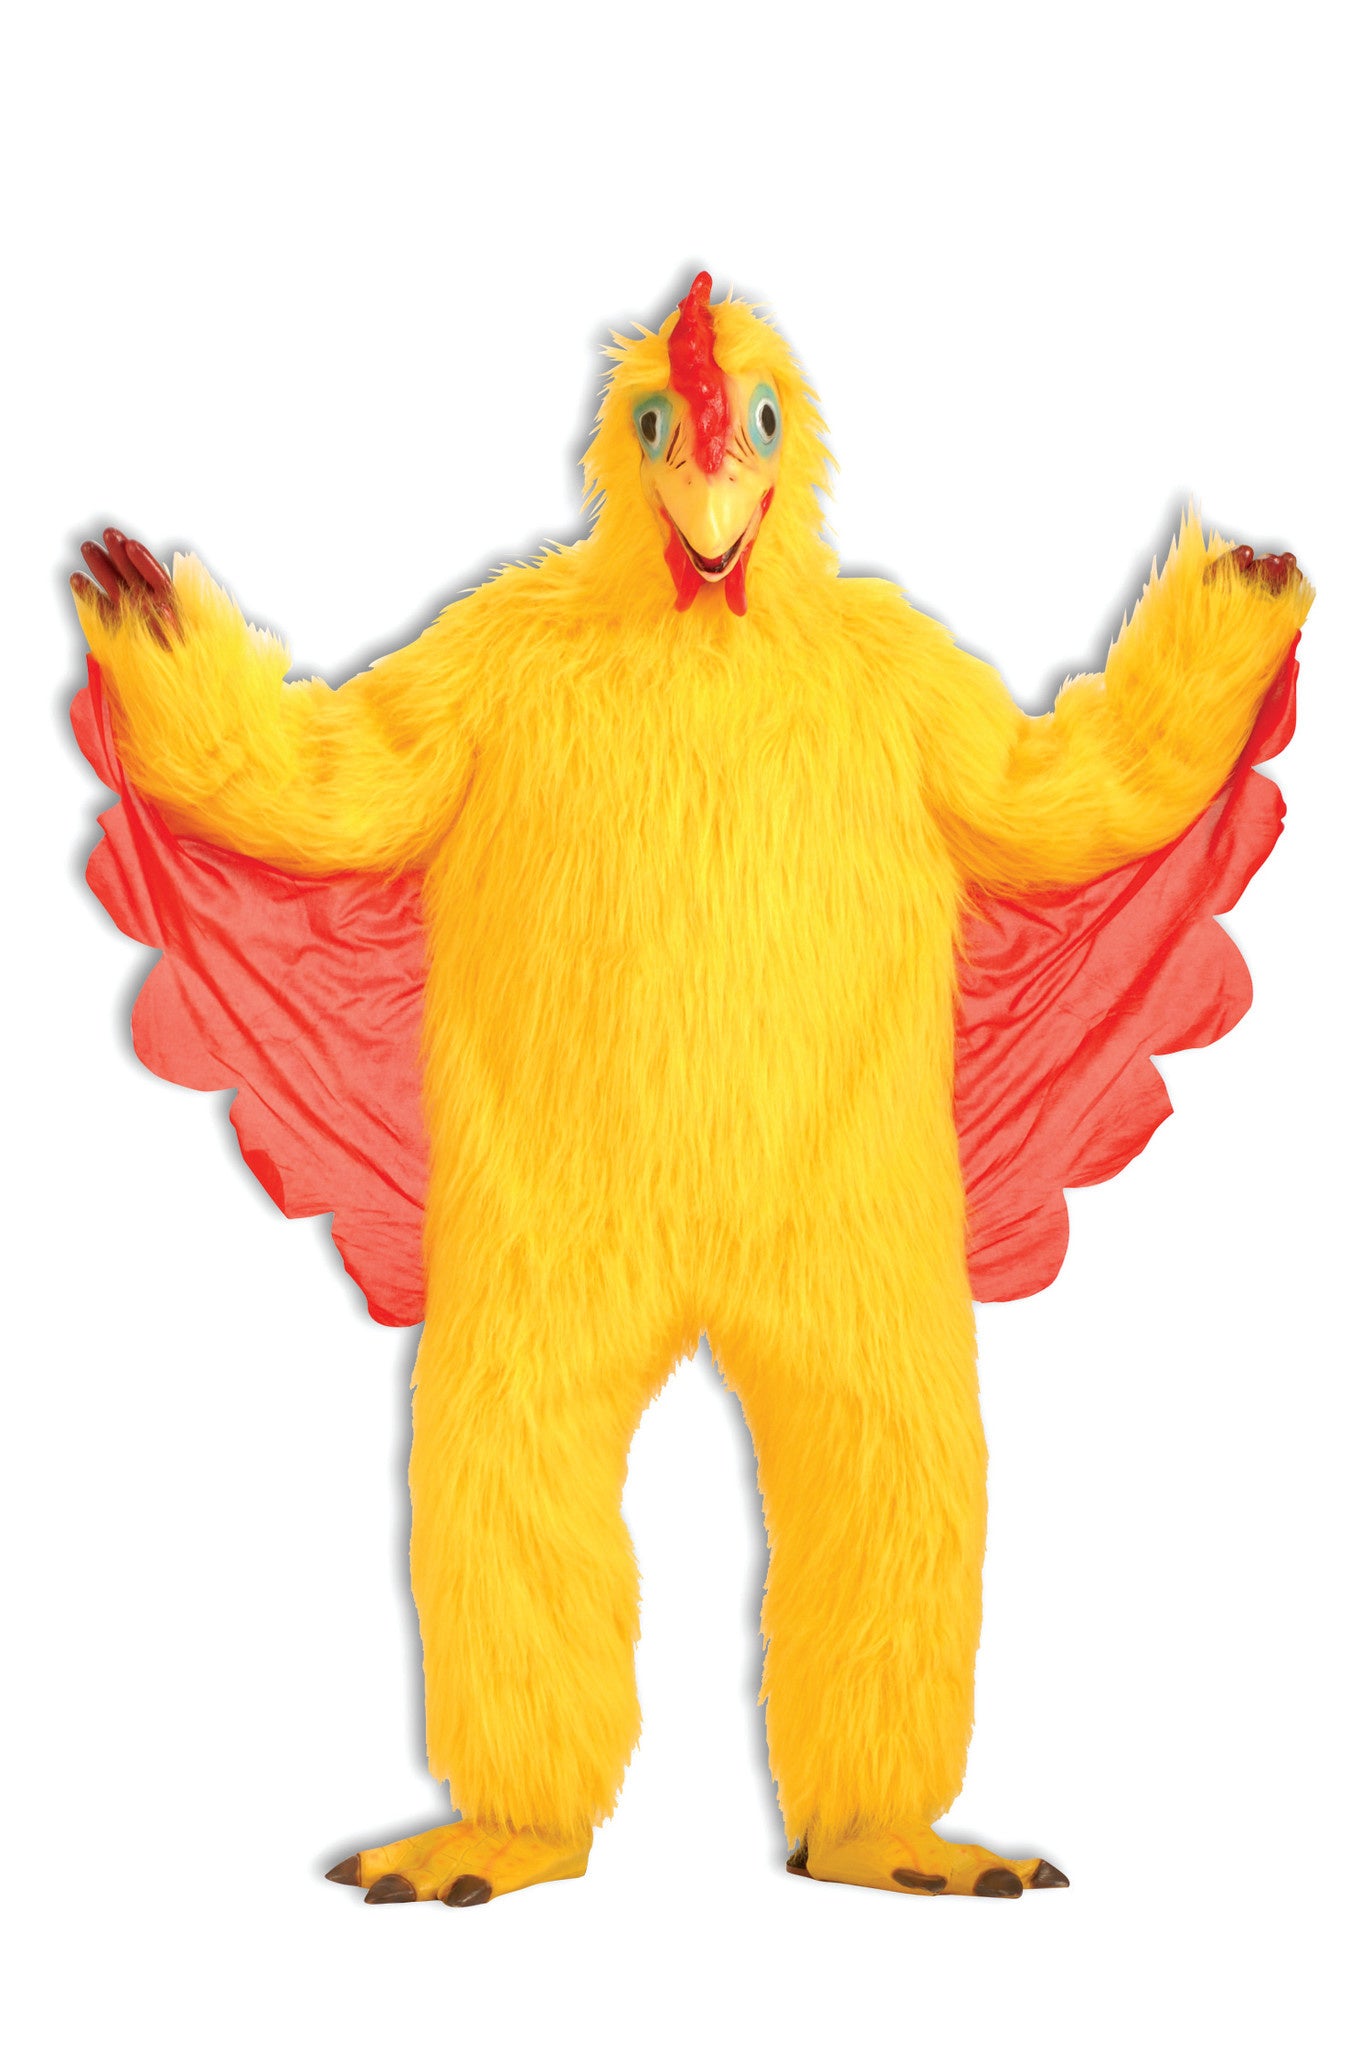 Adult Plush Mascot: Chicken - Standard